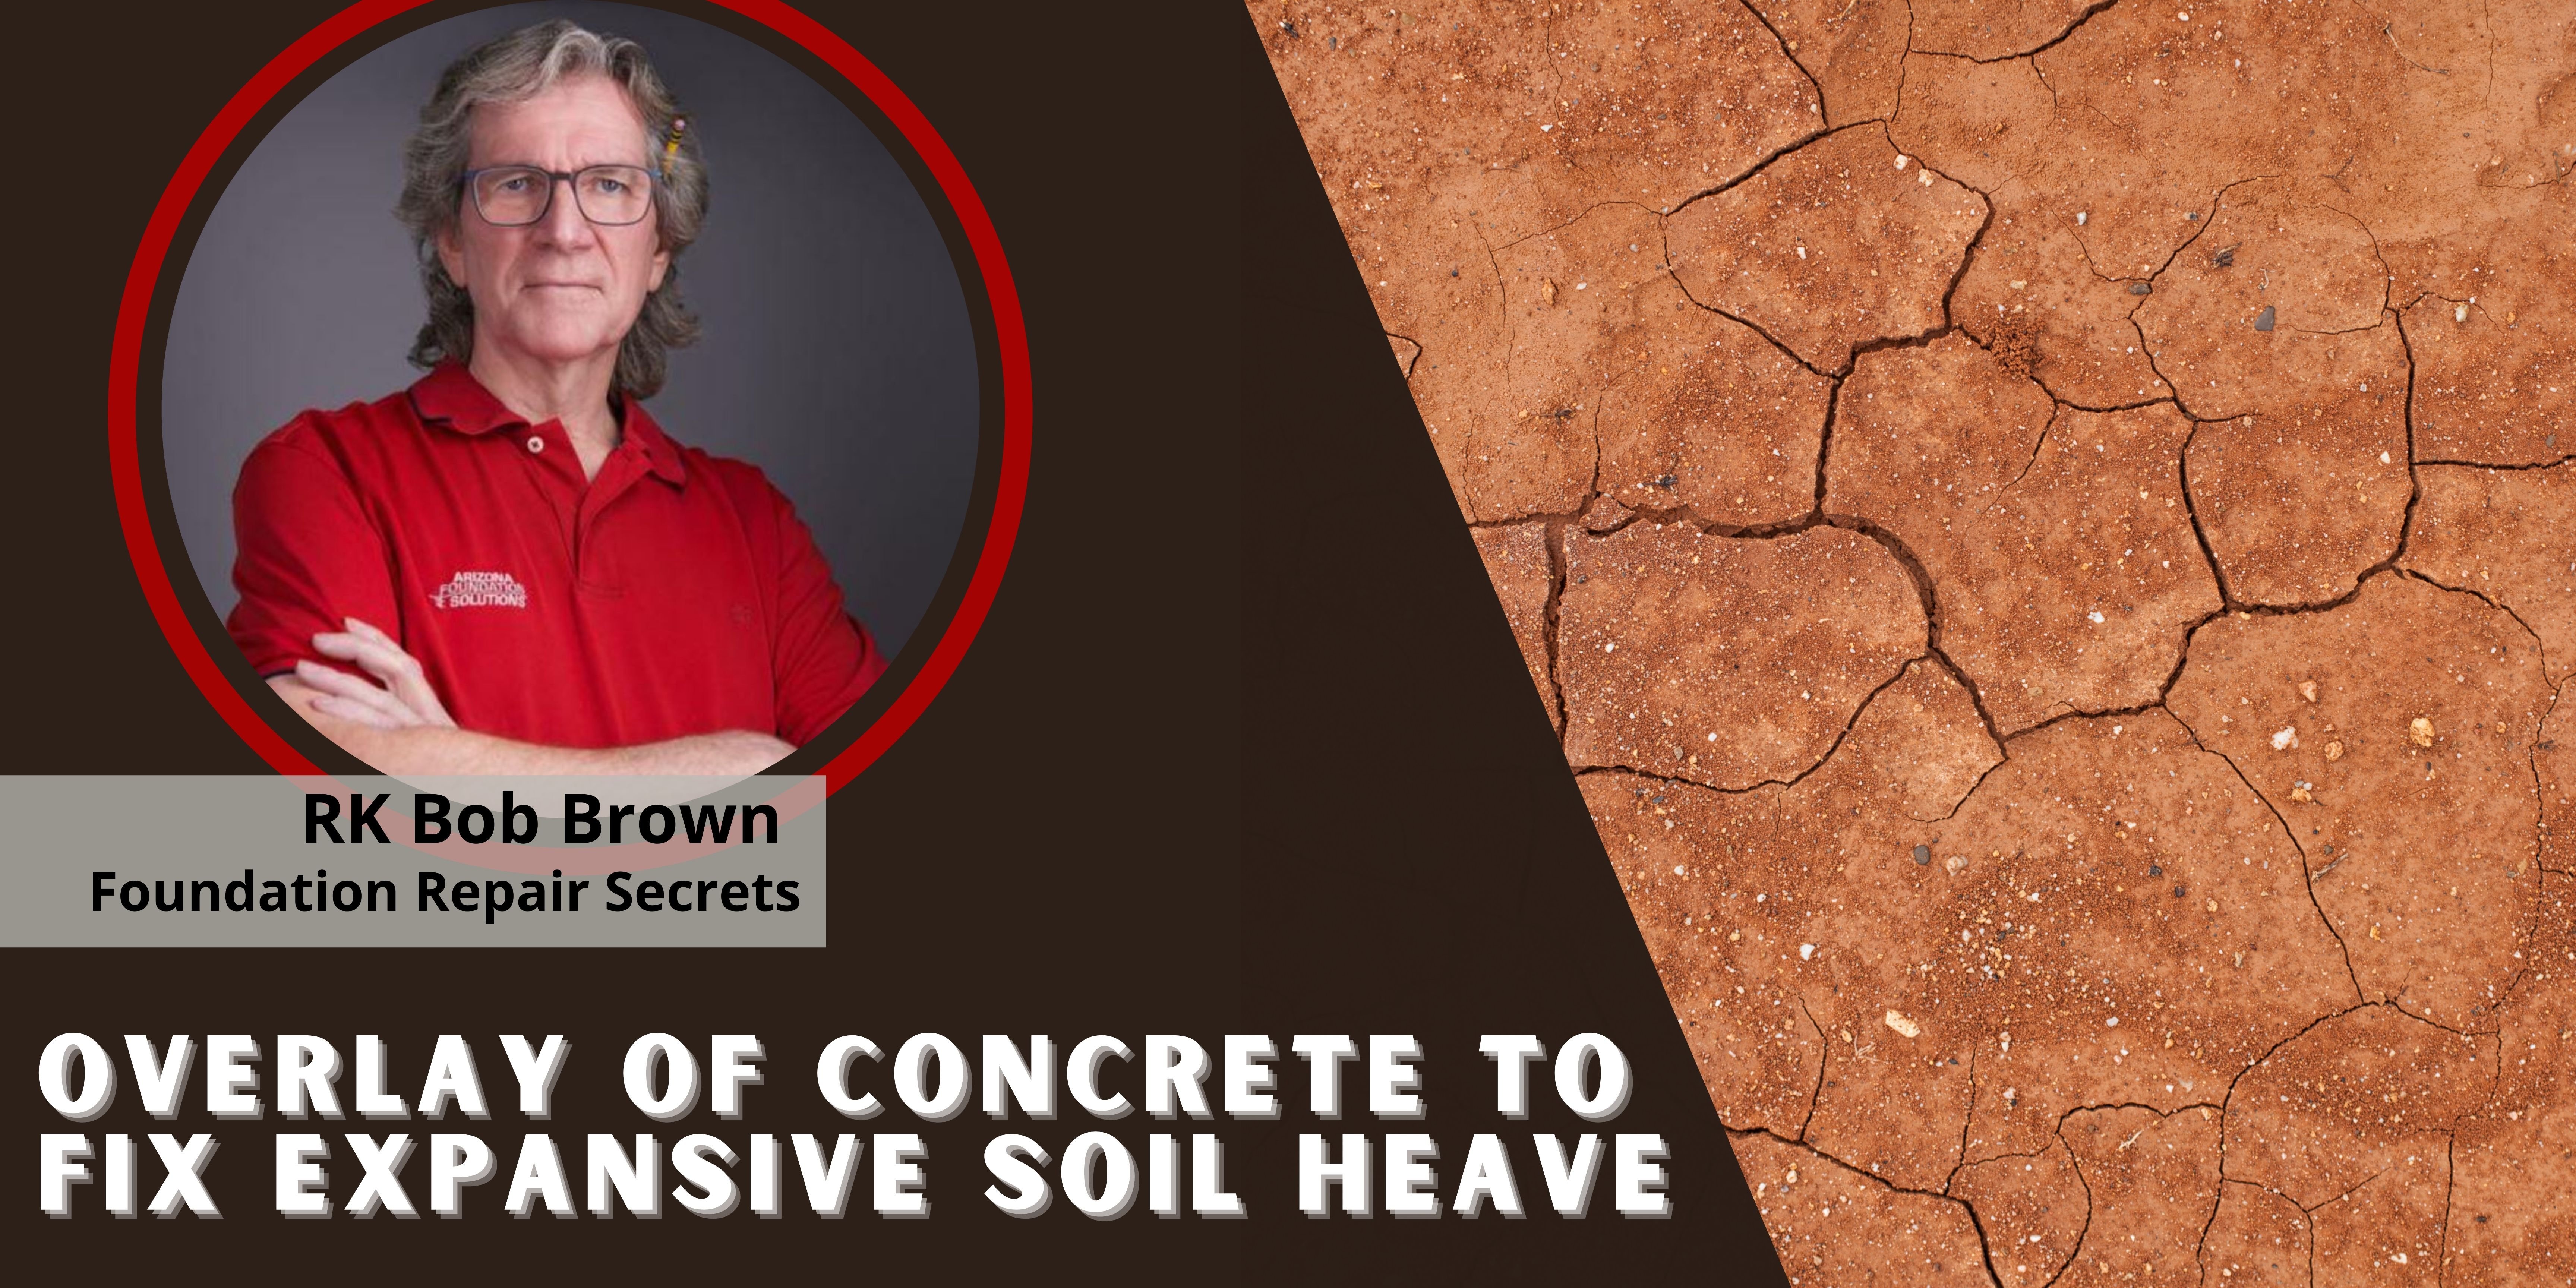 Foundation Repair Secrets Overlay of Concrete to Fix Expansive Soil Heave